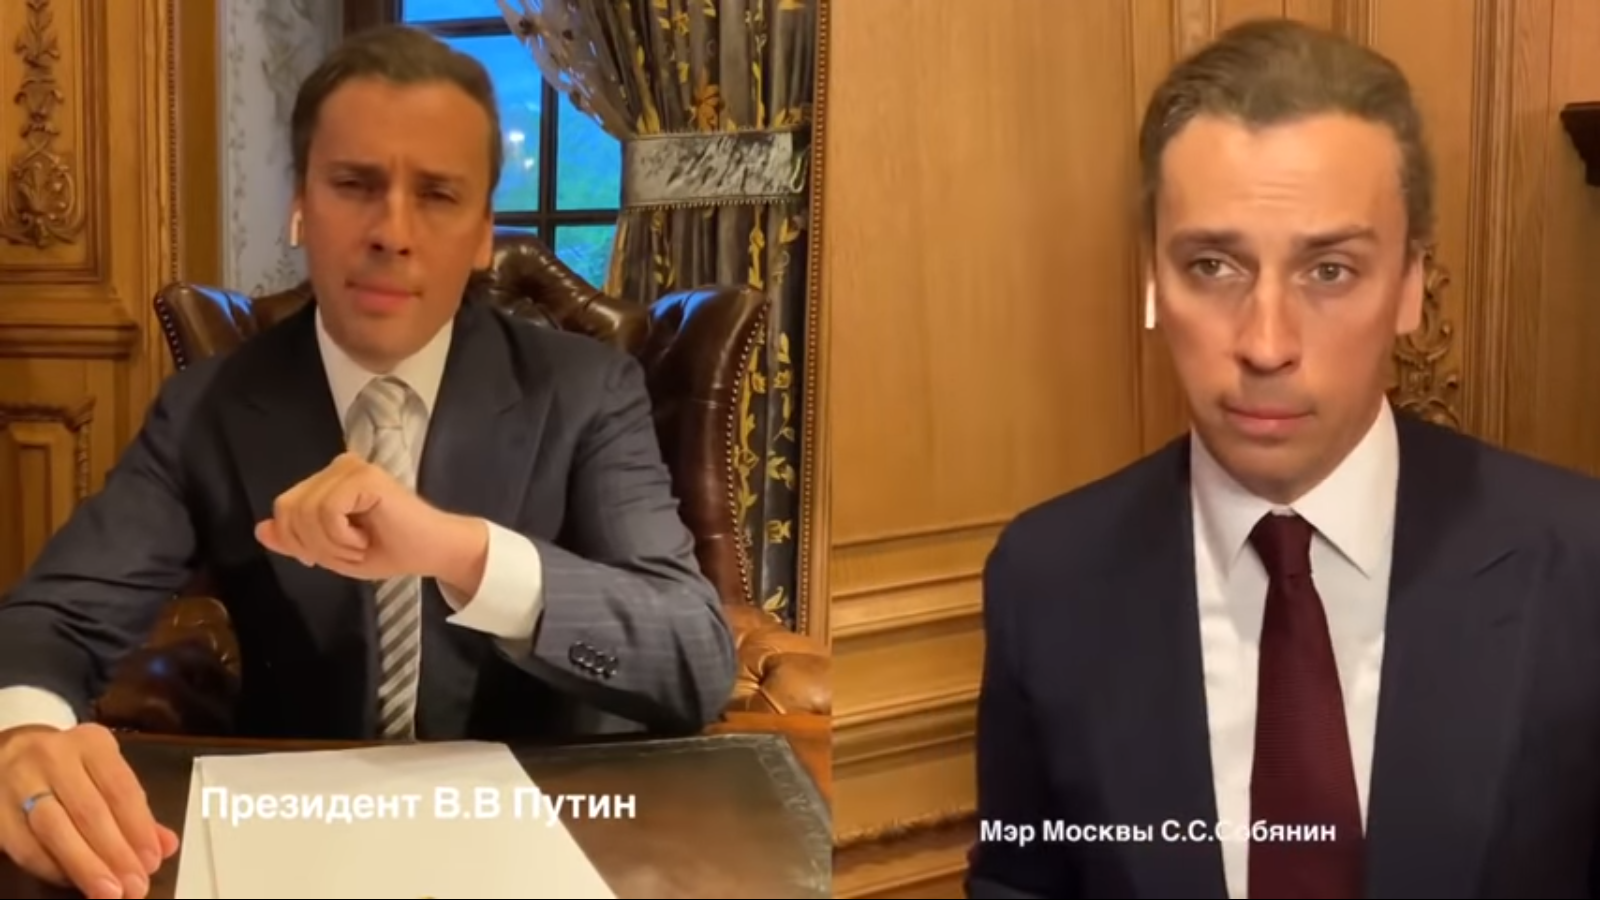 Video of the day: Maxim Galkin mimics the dialogue between Putin and Sobyanin